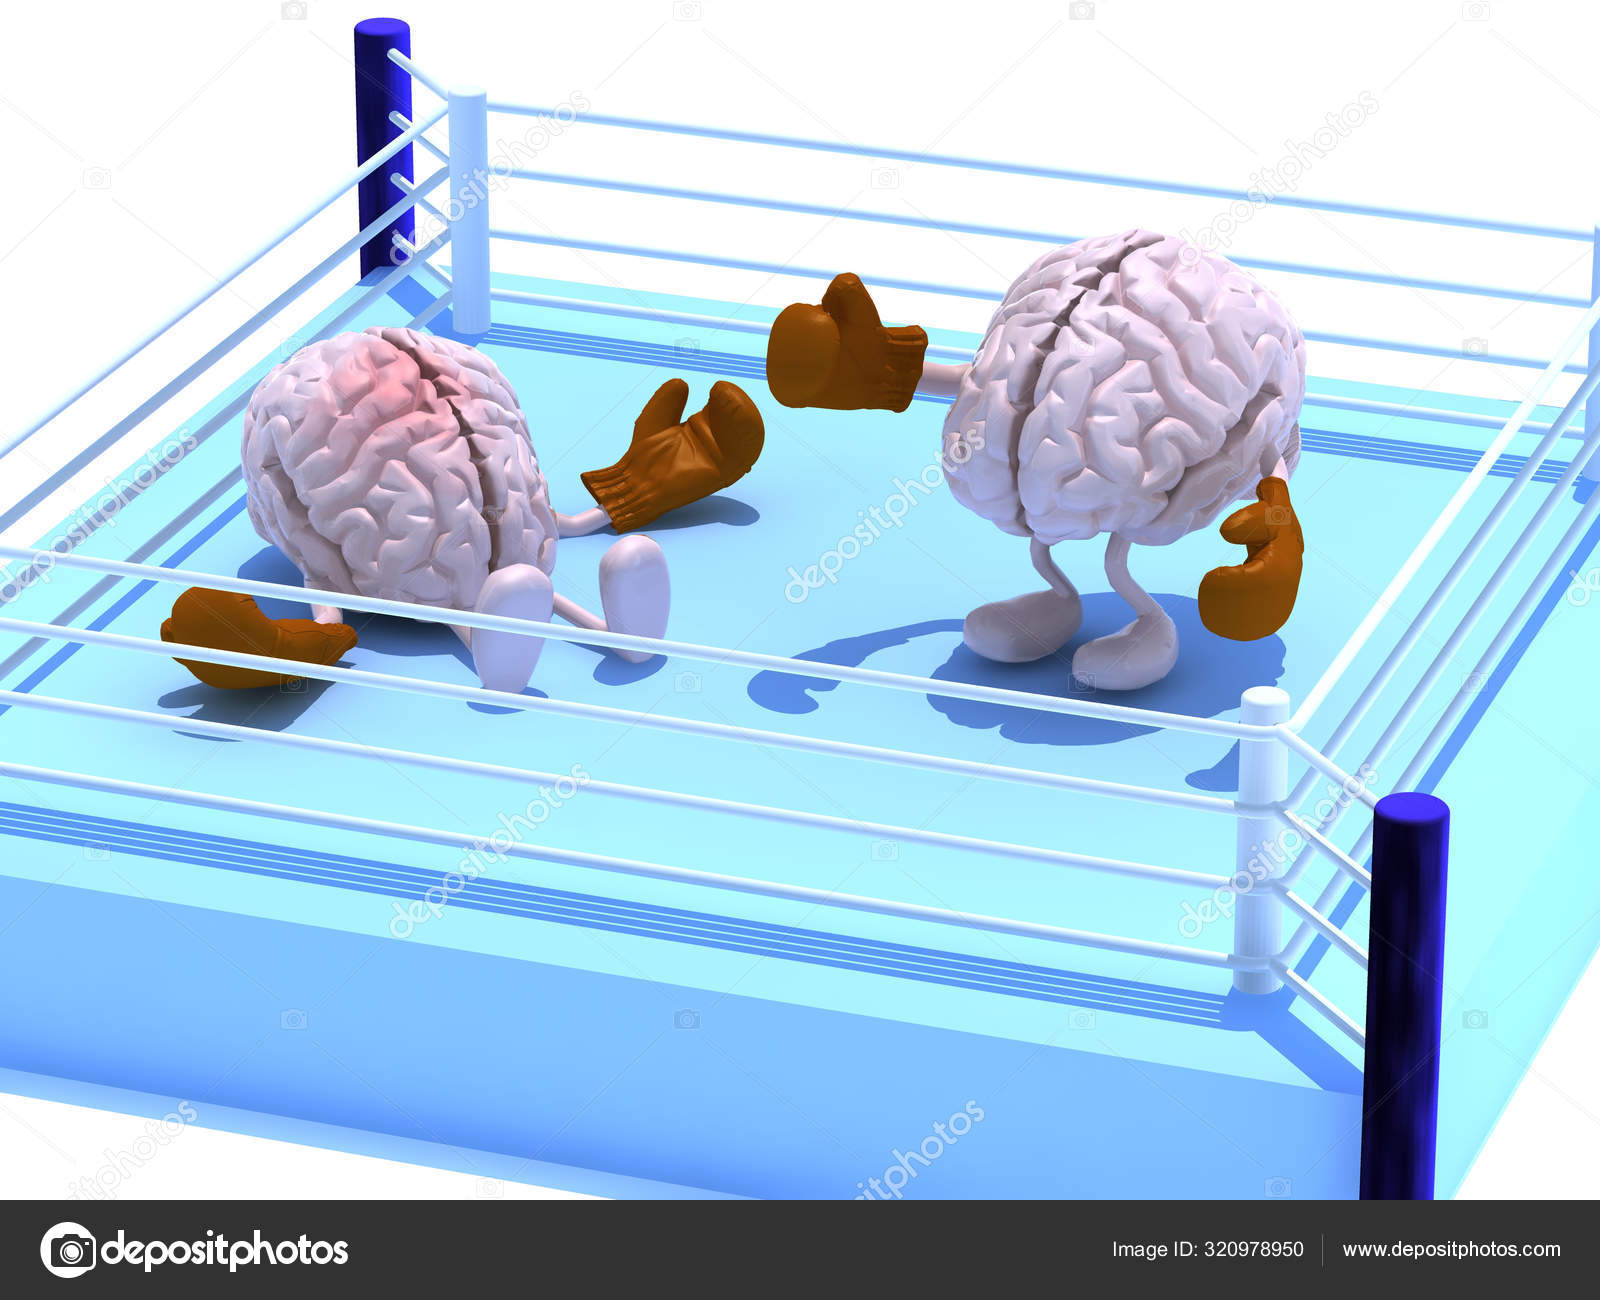 Брэйн бокс вс. Картинки для игры Брейн бокс. Brain Box картинка на русском. Brain Box игра пример картинка на русском. 3d illustration boy with Box.